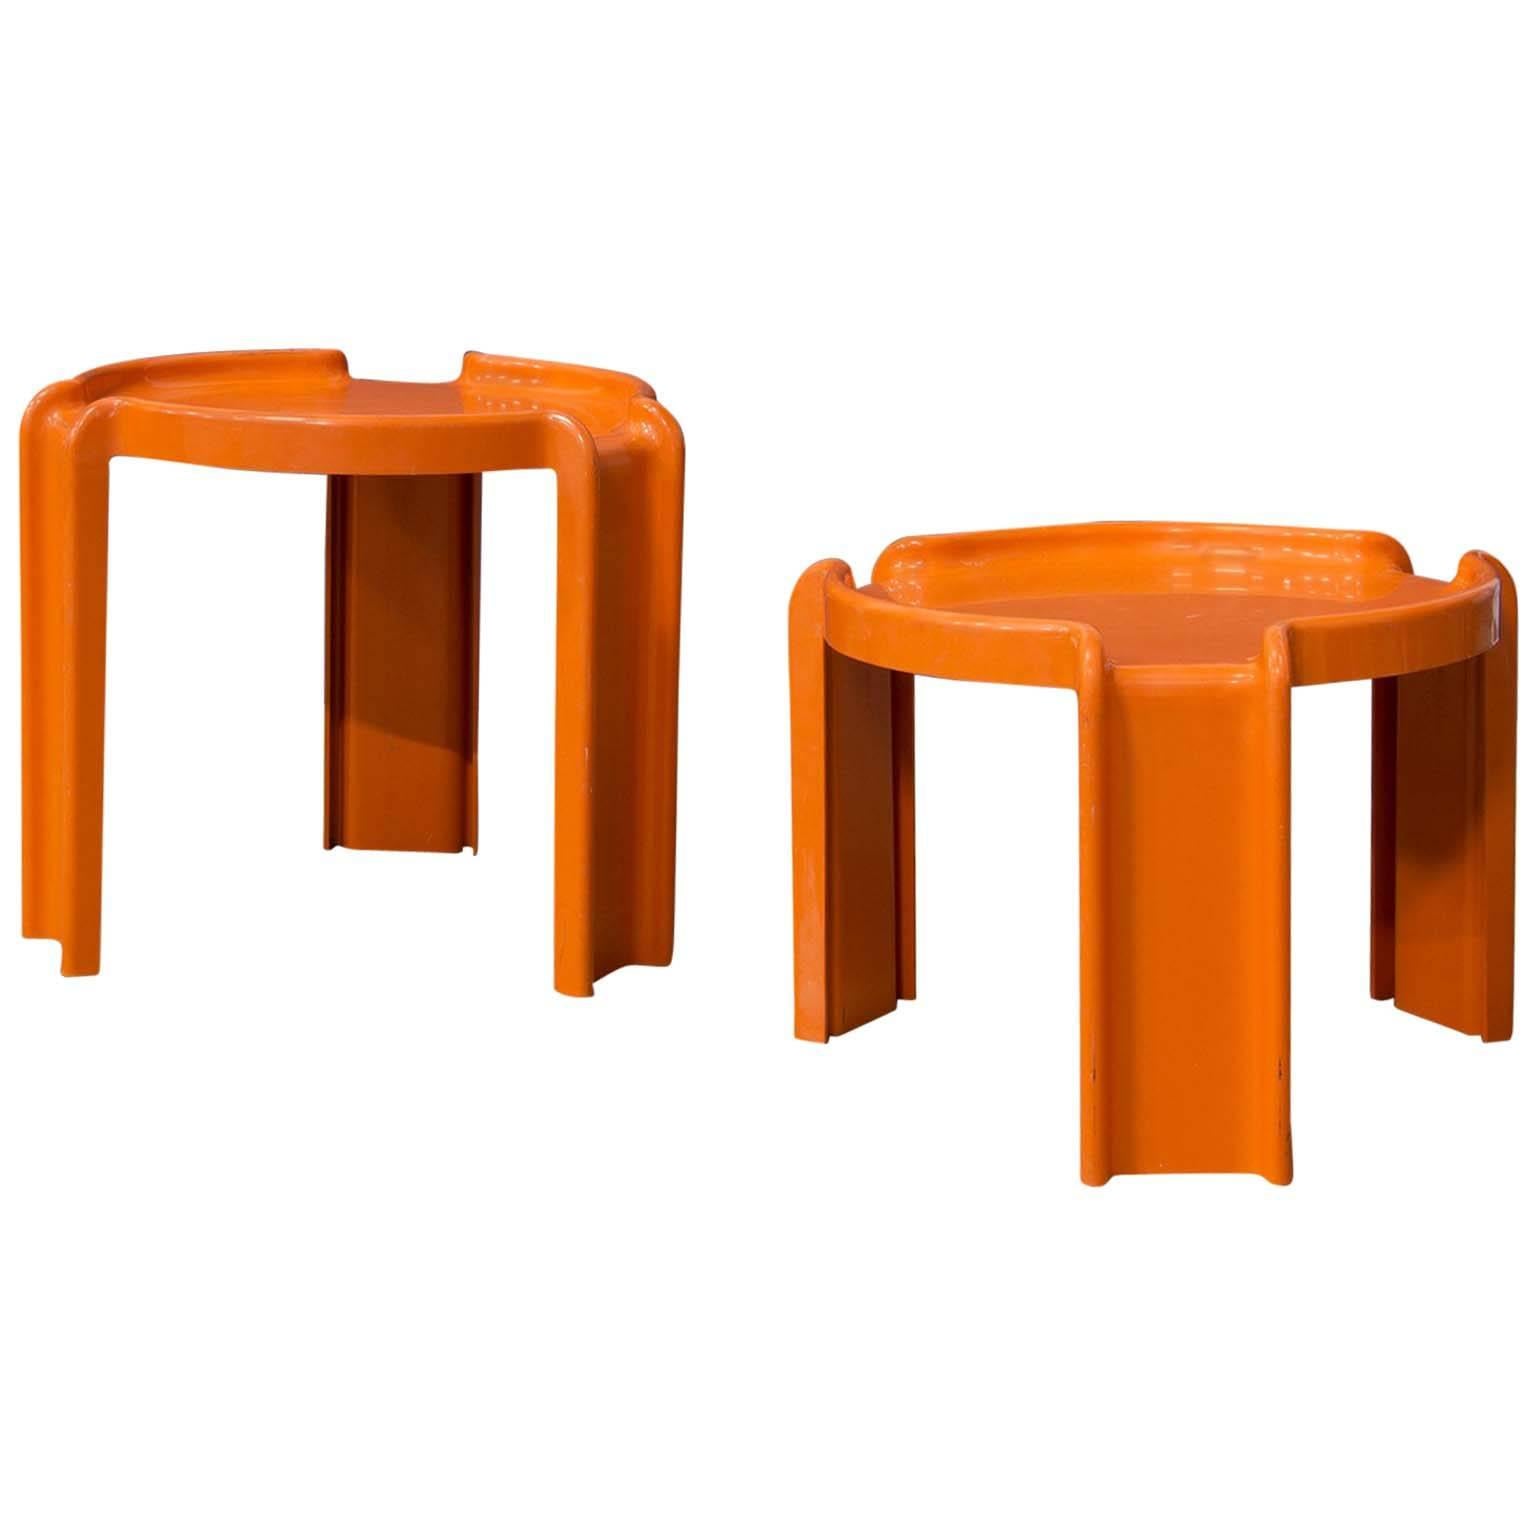 1968, Giotto Stoppino for Kartell, Two Orange Plastic Nesting Tables